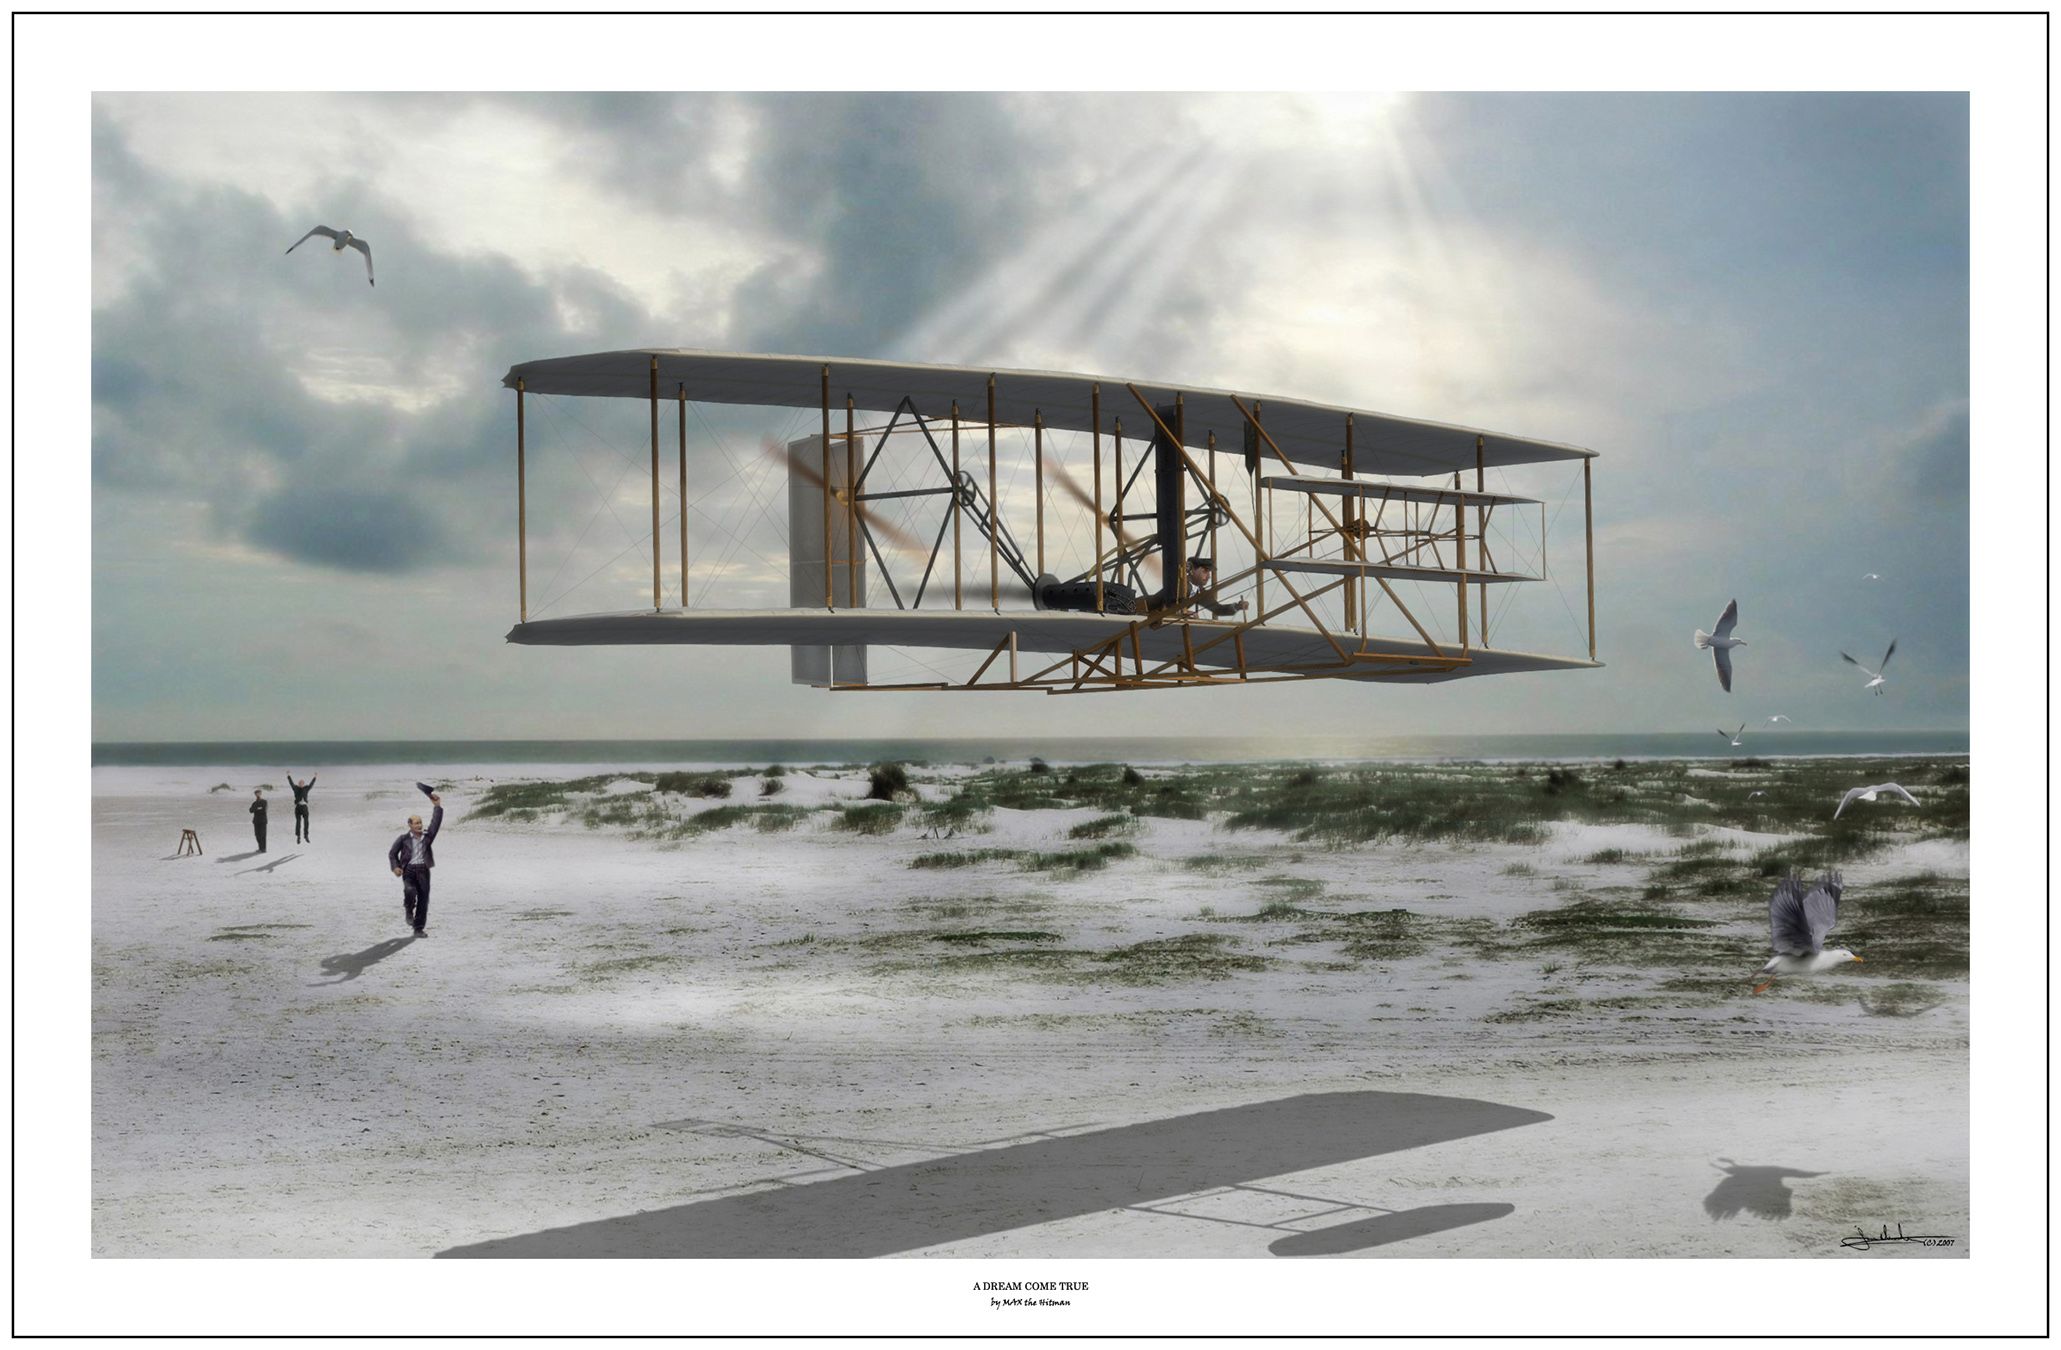 Wright Brothers Wallpaper. Phoenix Wright Wallpaper, Robin Wright Wallpaper and David Wright Wallpaper